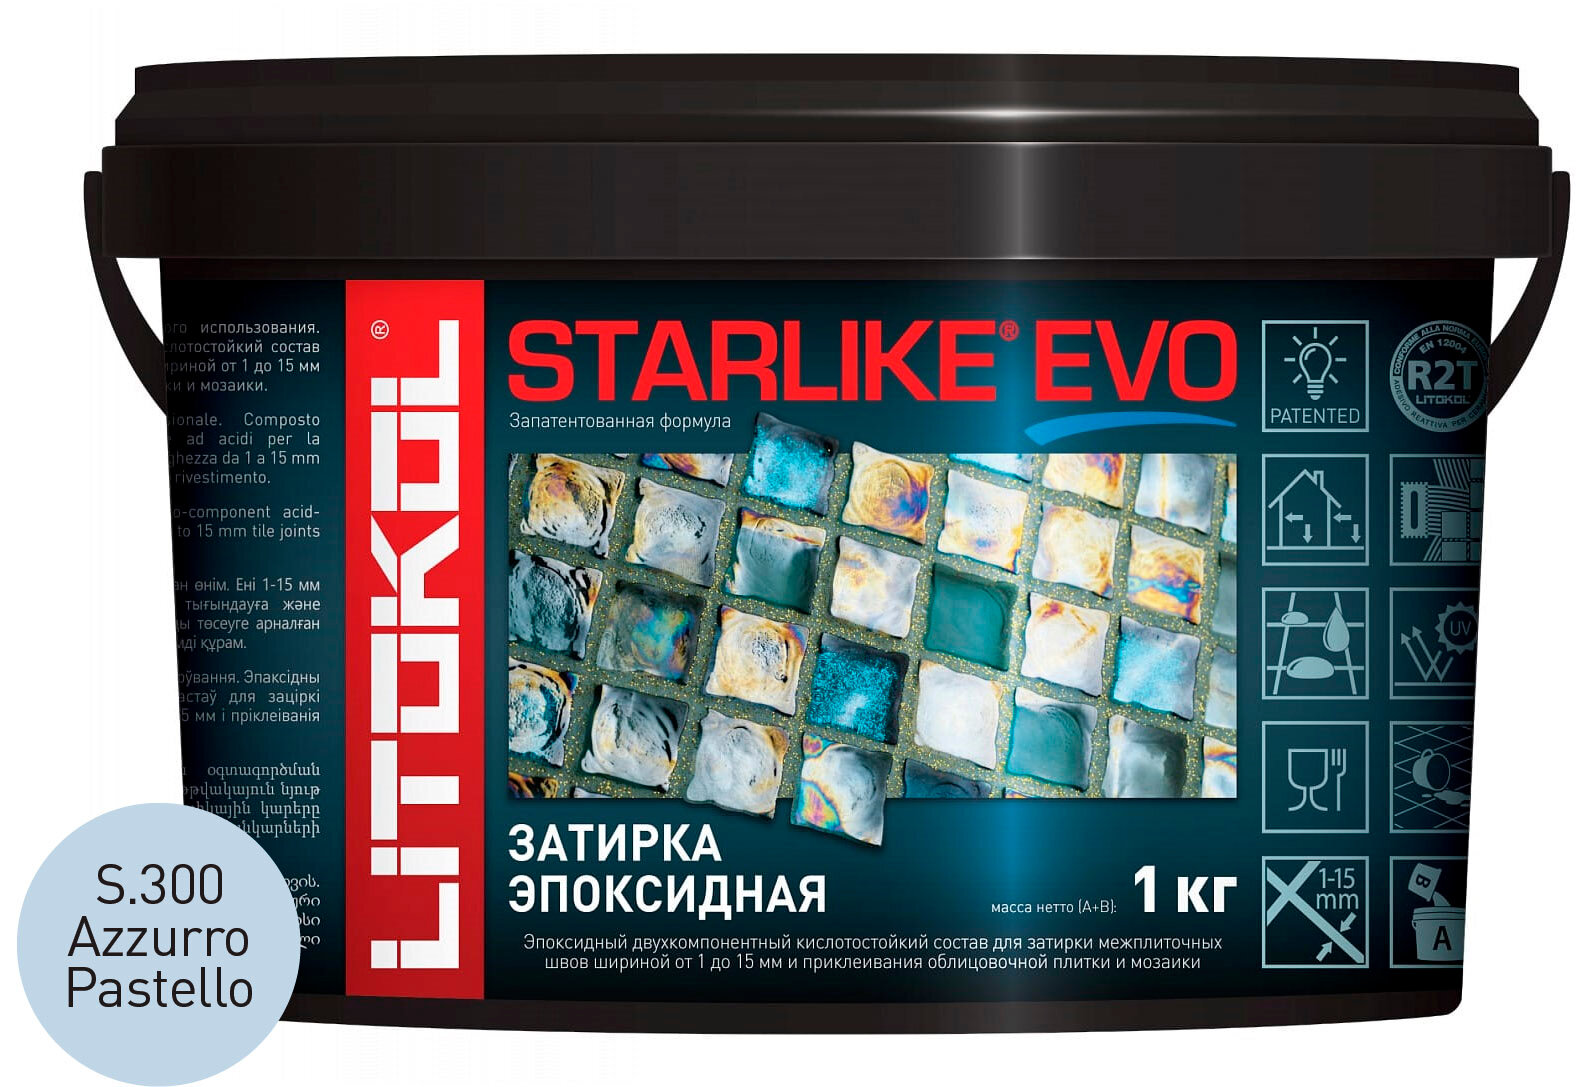 Затирка эпоксидная LITOKOL STARLIKE EVO S.300 AZZURRO PASTELLO, 1 кг